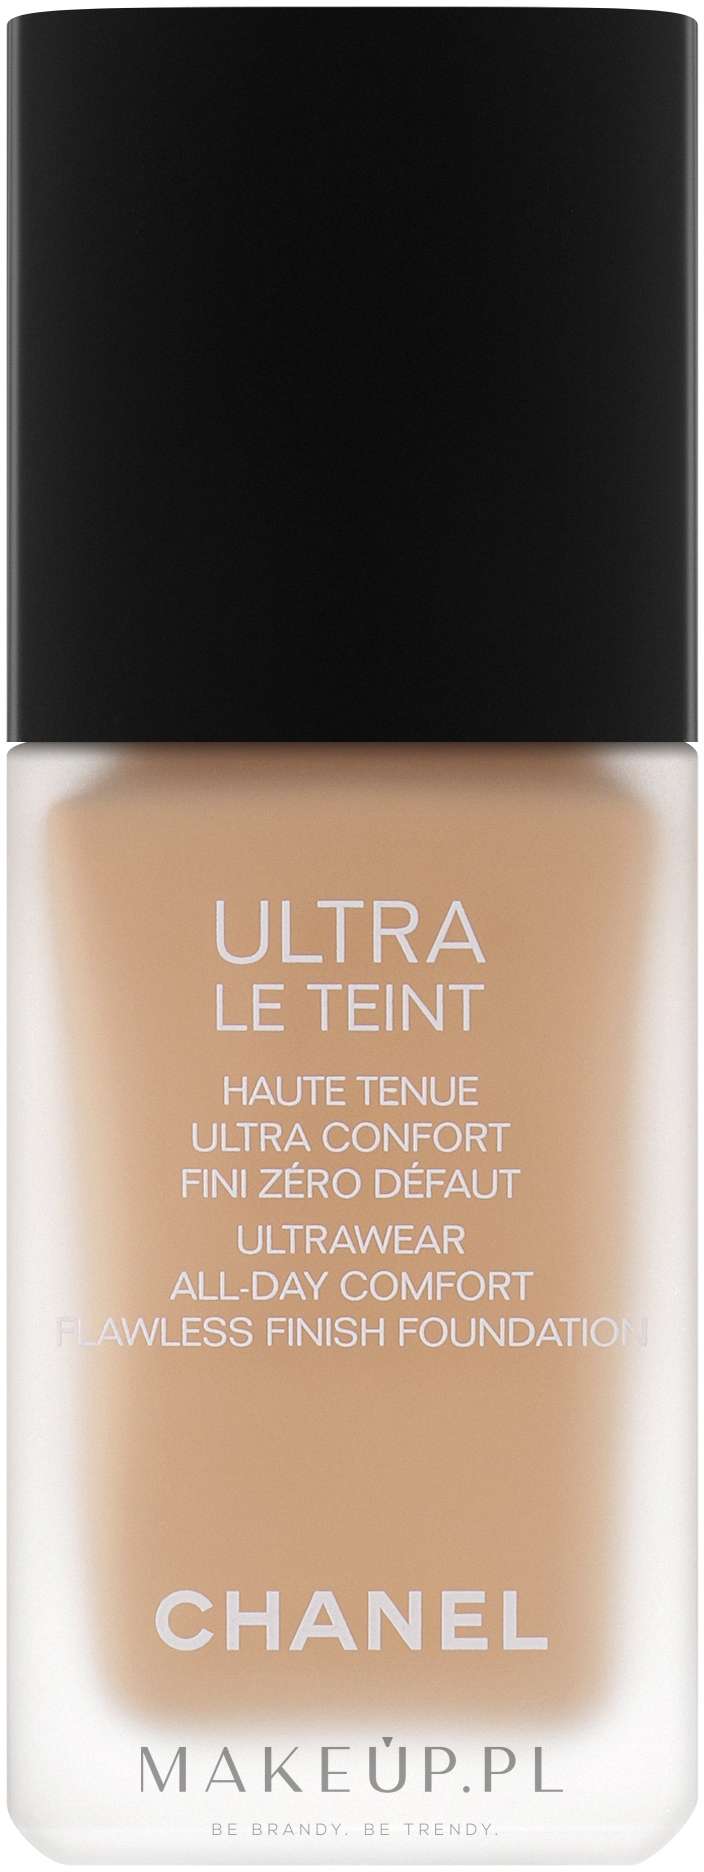  Chanel ULTRA LE TEINT Ultrawear All-Day Comfort